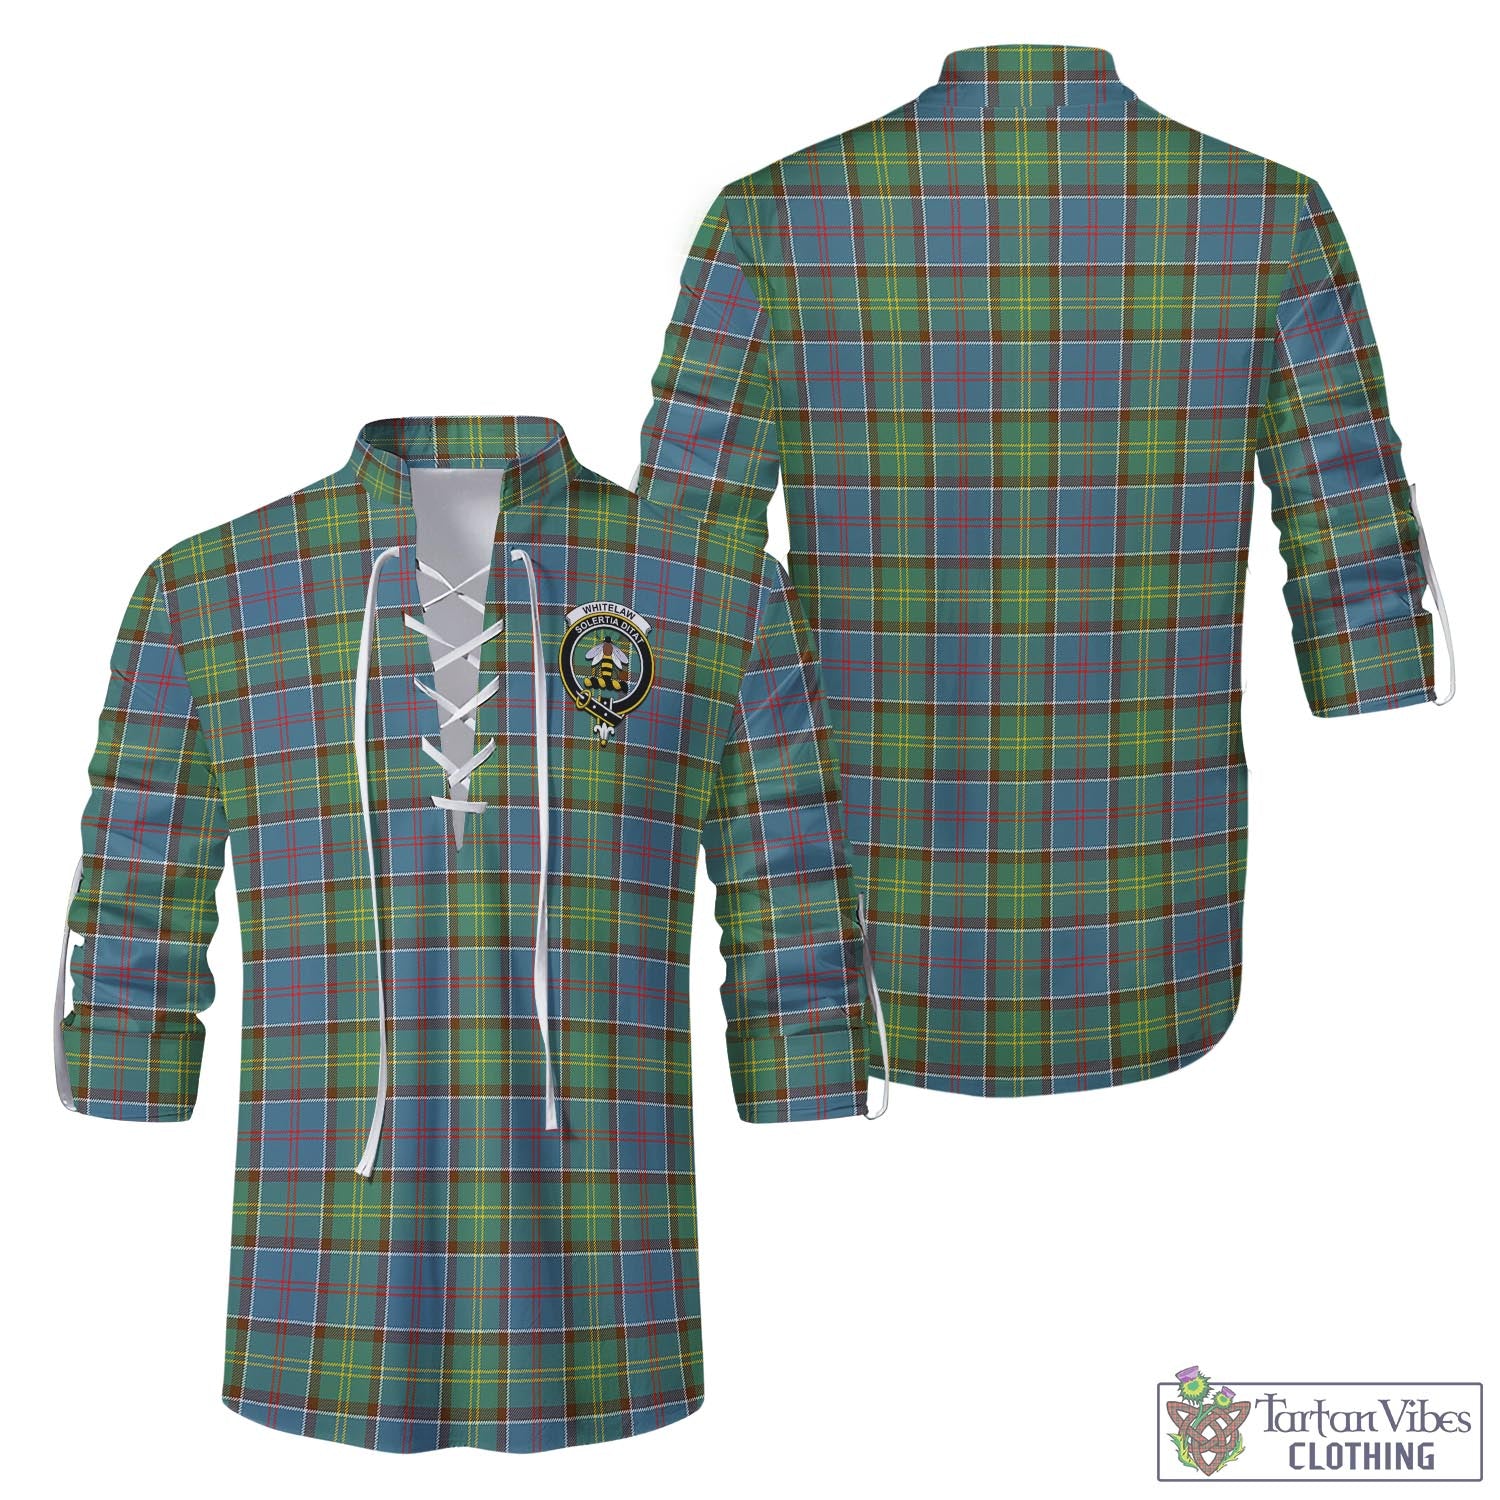 Tartan Vibes Clothing Whitelaw Tartan Men's Scottish Traditional Jacobite Ghillie Kilt Shirt with Family Crest